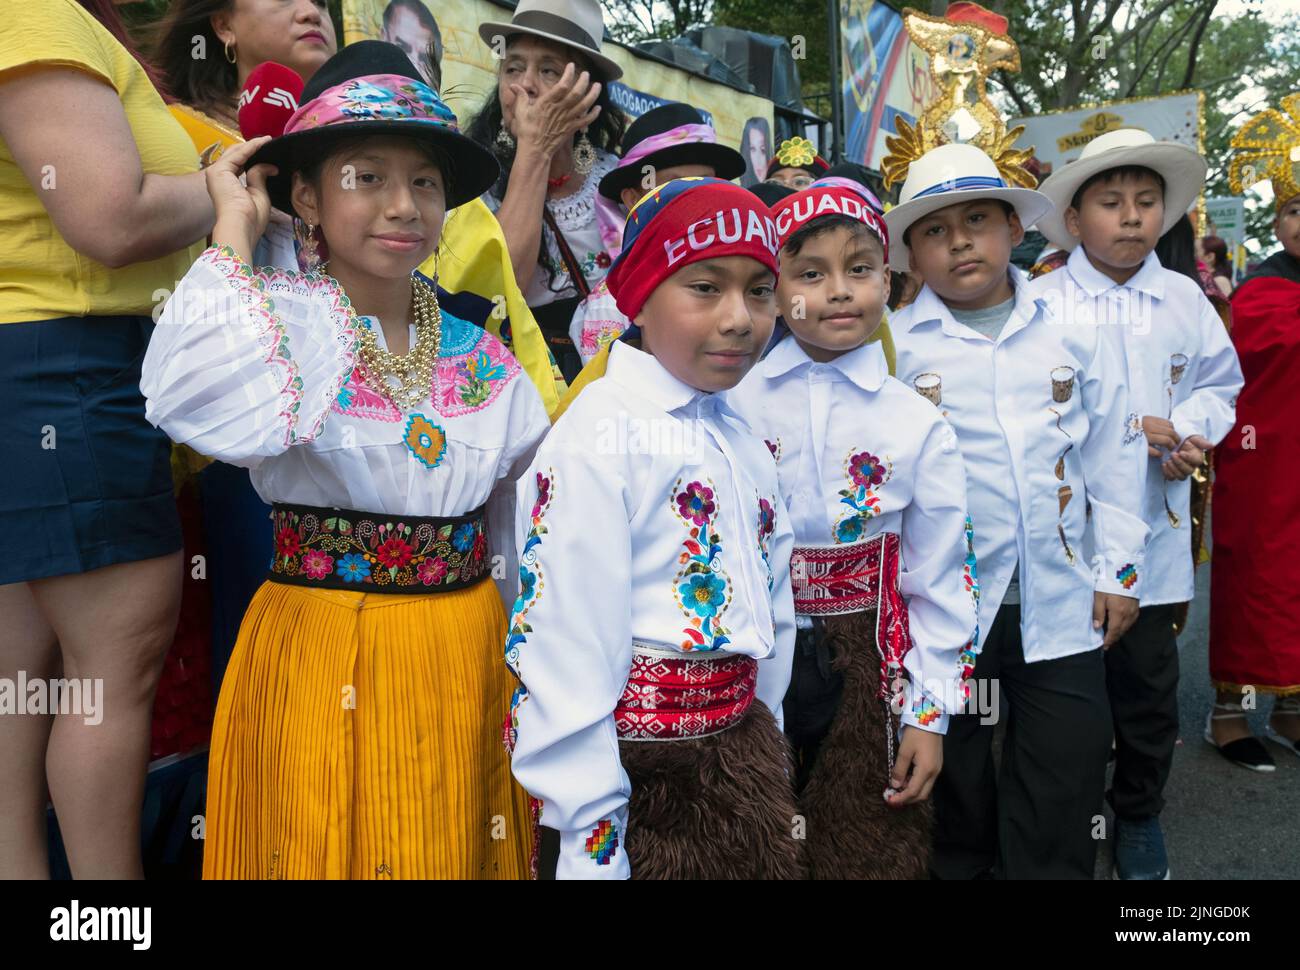 Bambini ecuadoriani in abiti etnici tradizionali alla Parata ecuadoriana NYC 2022 a Jackson Heights, Queens, New York City. Foto Stock